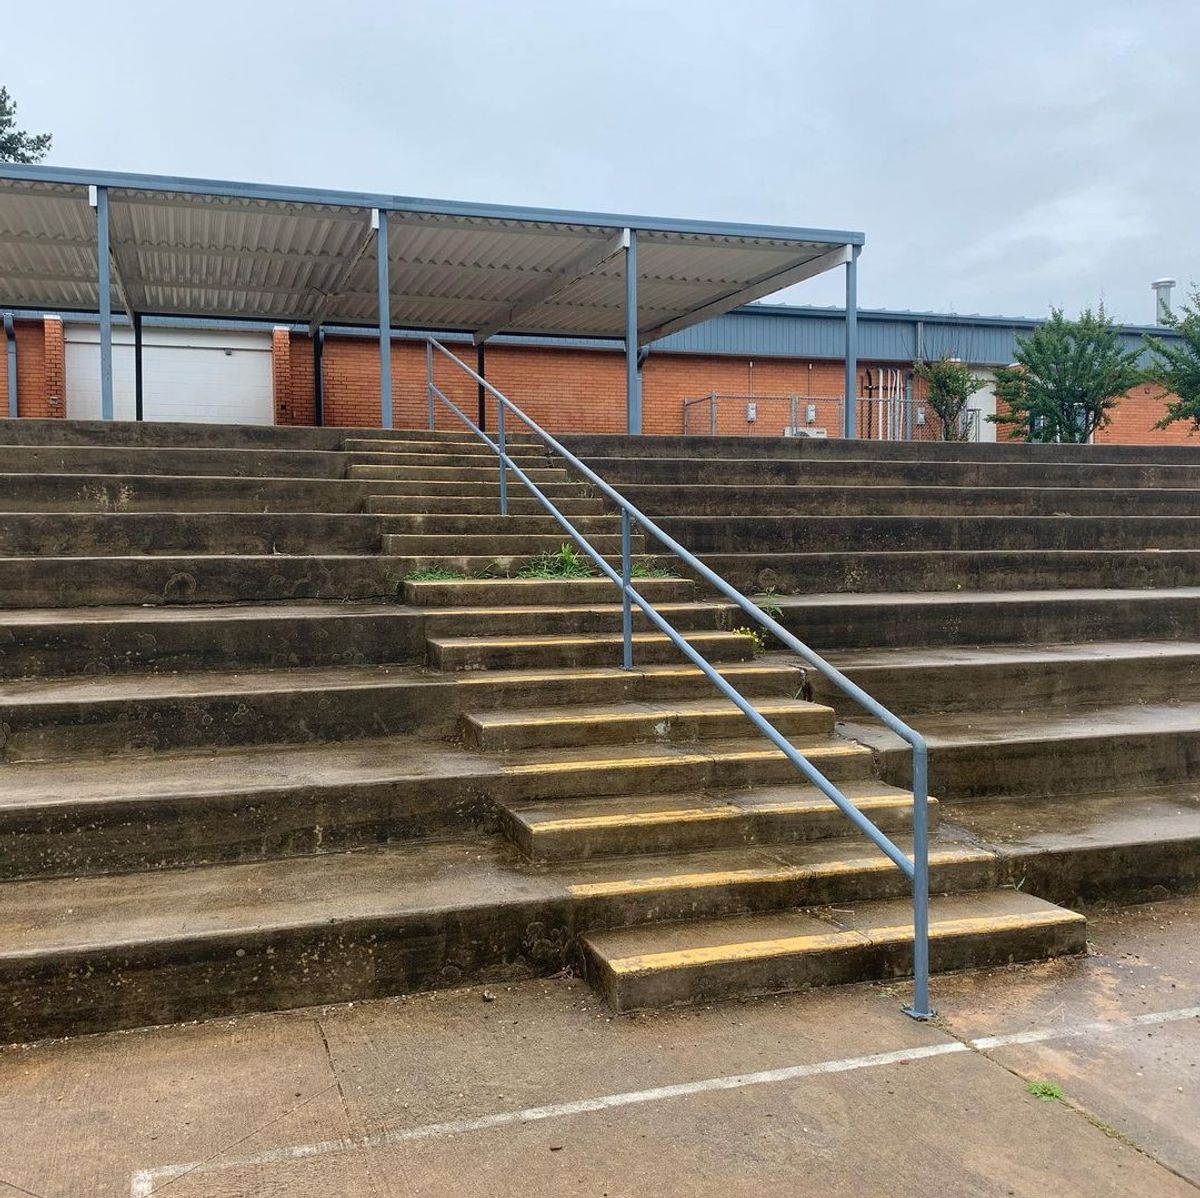 Image for skate spot Western Hills Elementary School - 18 Stair Rail